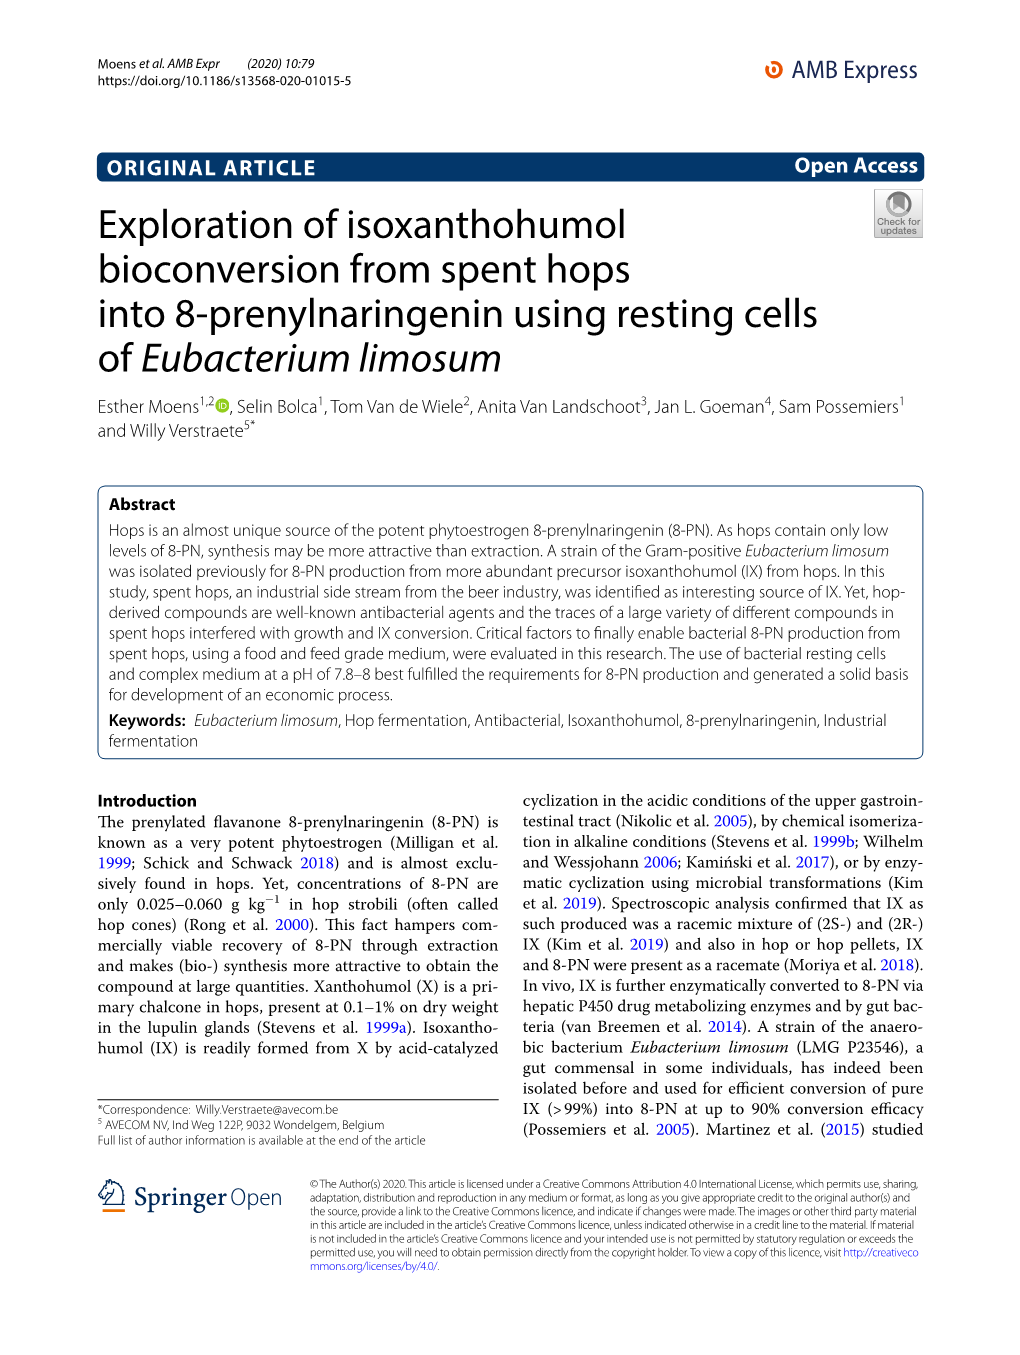 Exploration of Isoxanthohumol Bioconversion from Spent Hops Into